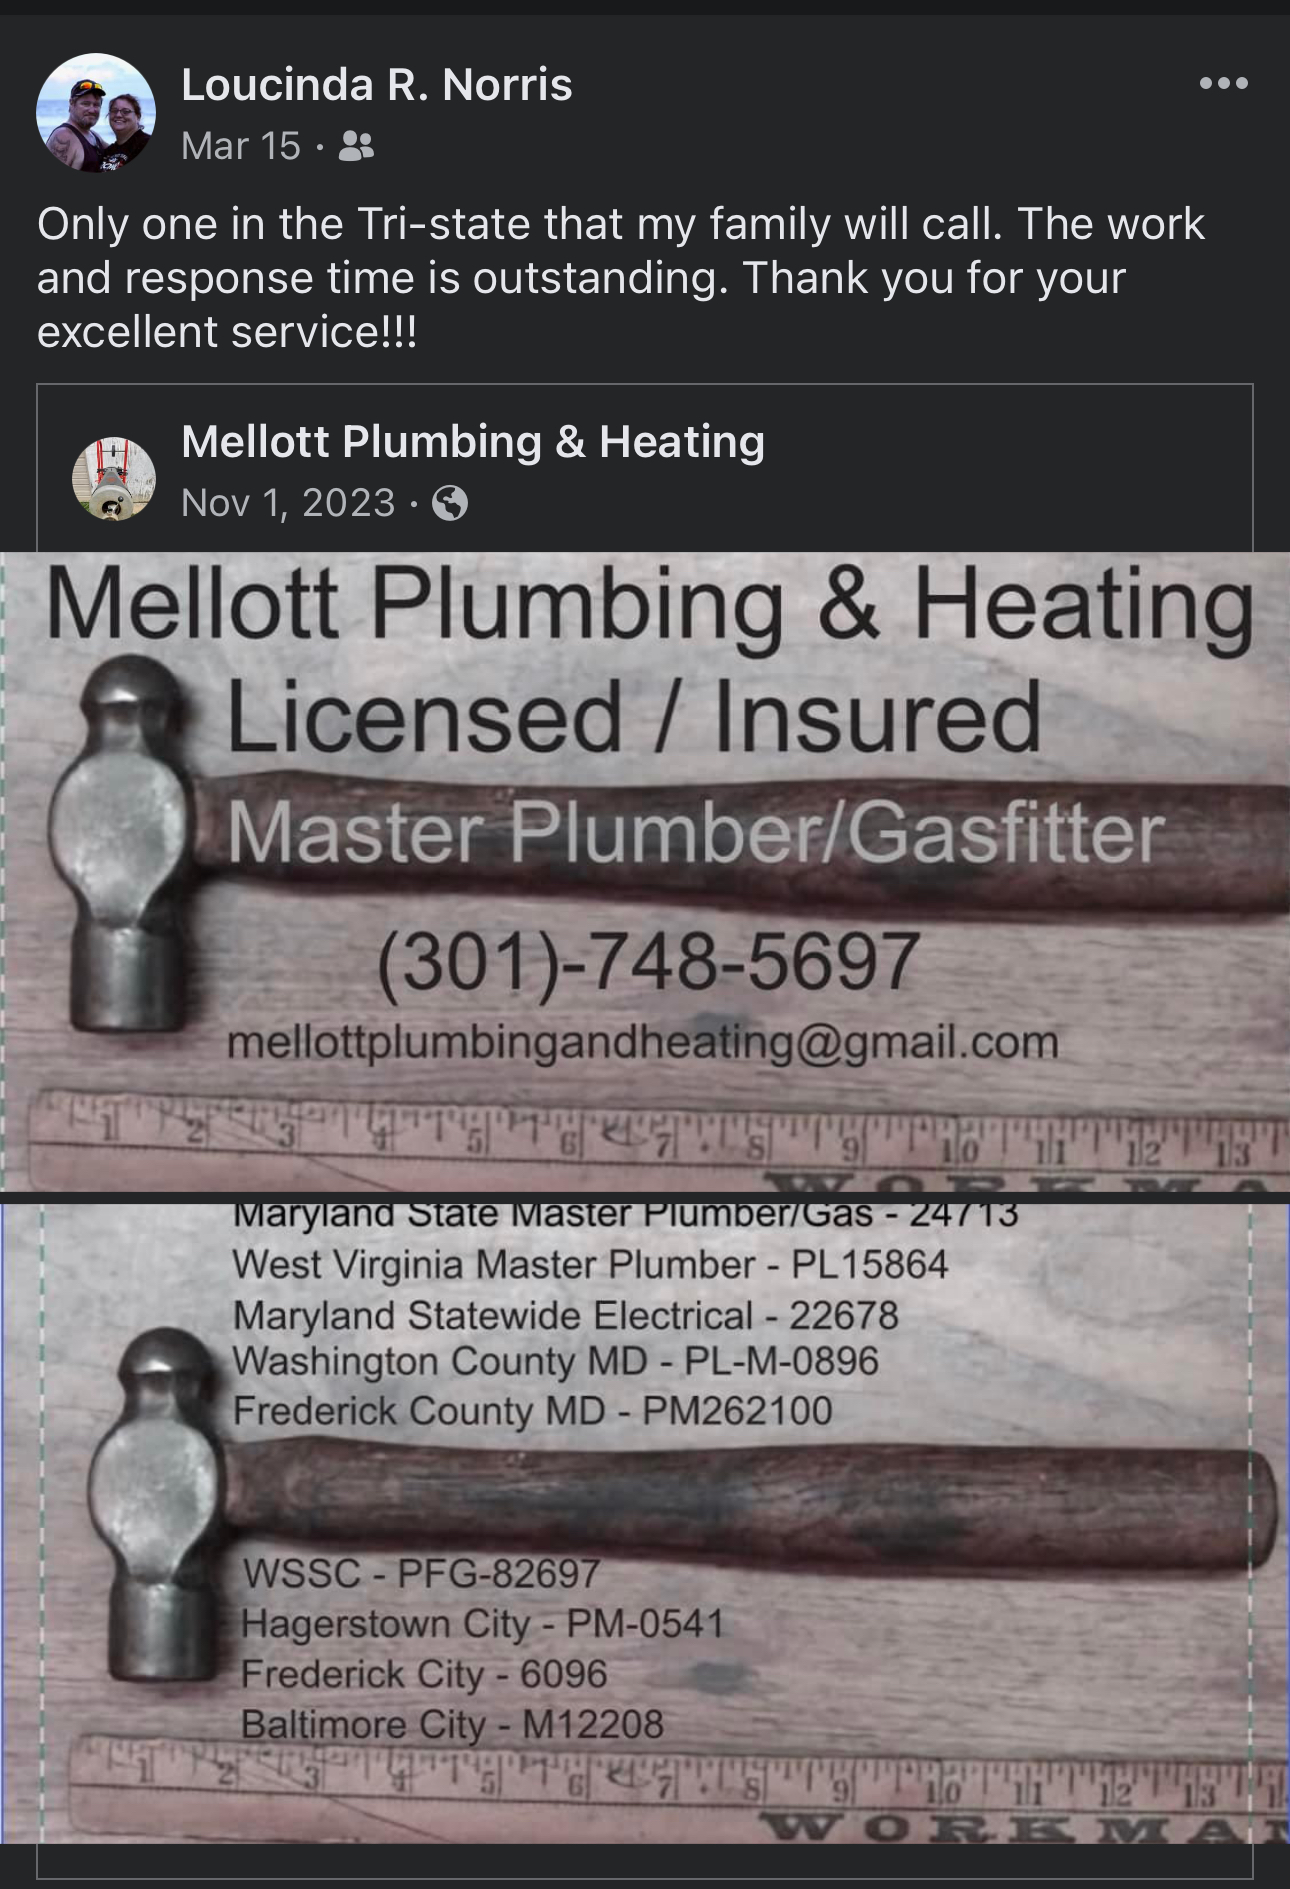 Mellott Plumbing & Heating 18 South St, Hancock Maryland 21750